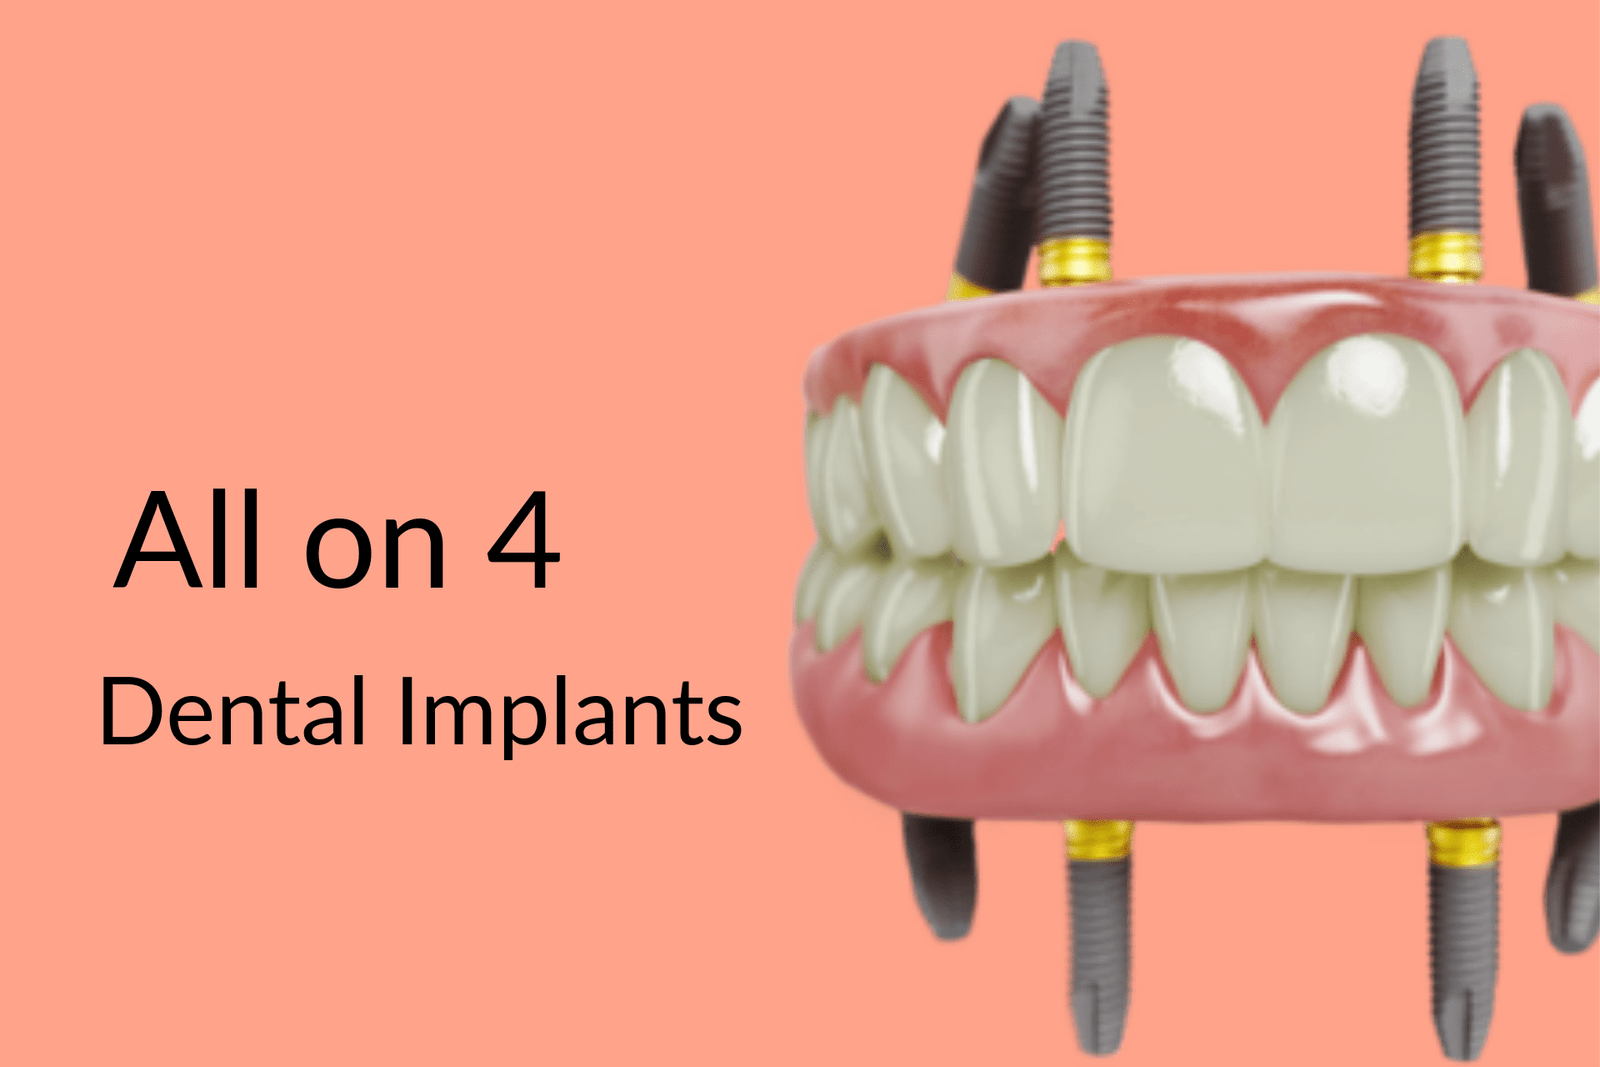 All on 4 dental implants in Gurgaon